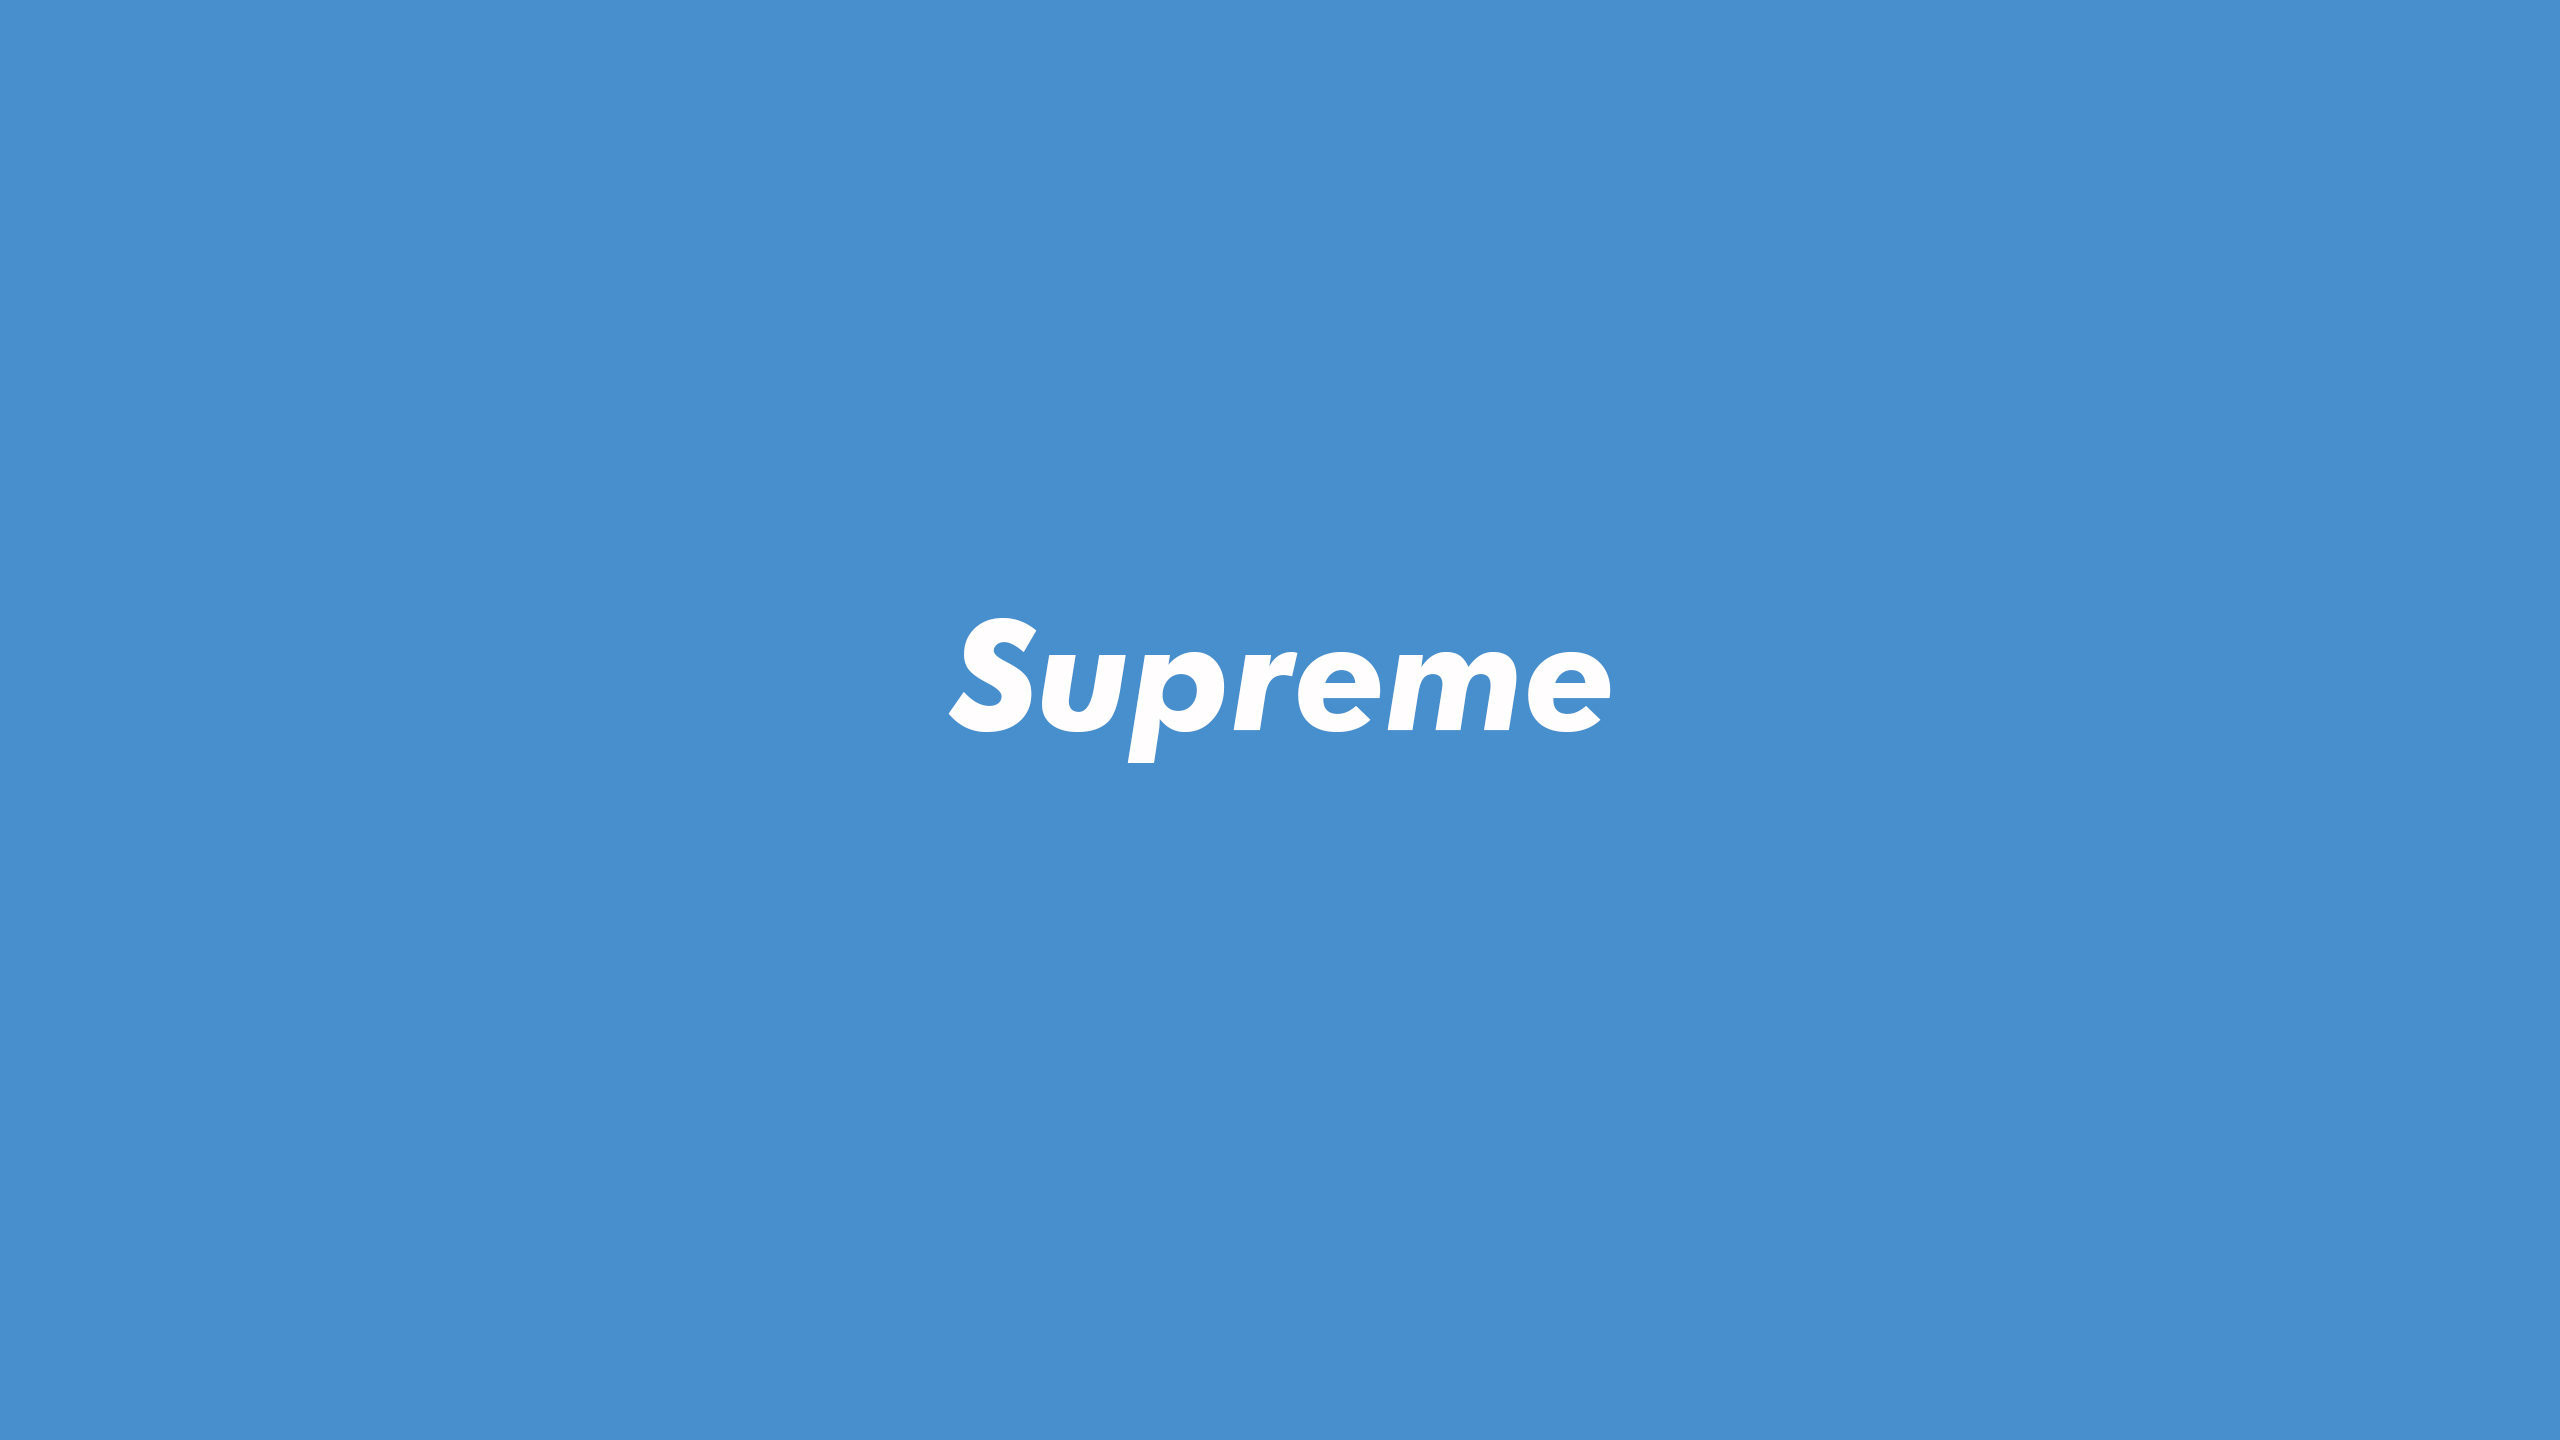 Supreme Wallpapers – Download Supreme HD Wallpapers